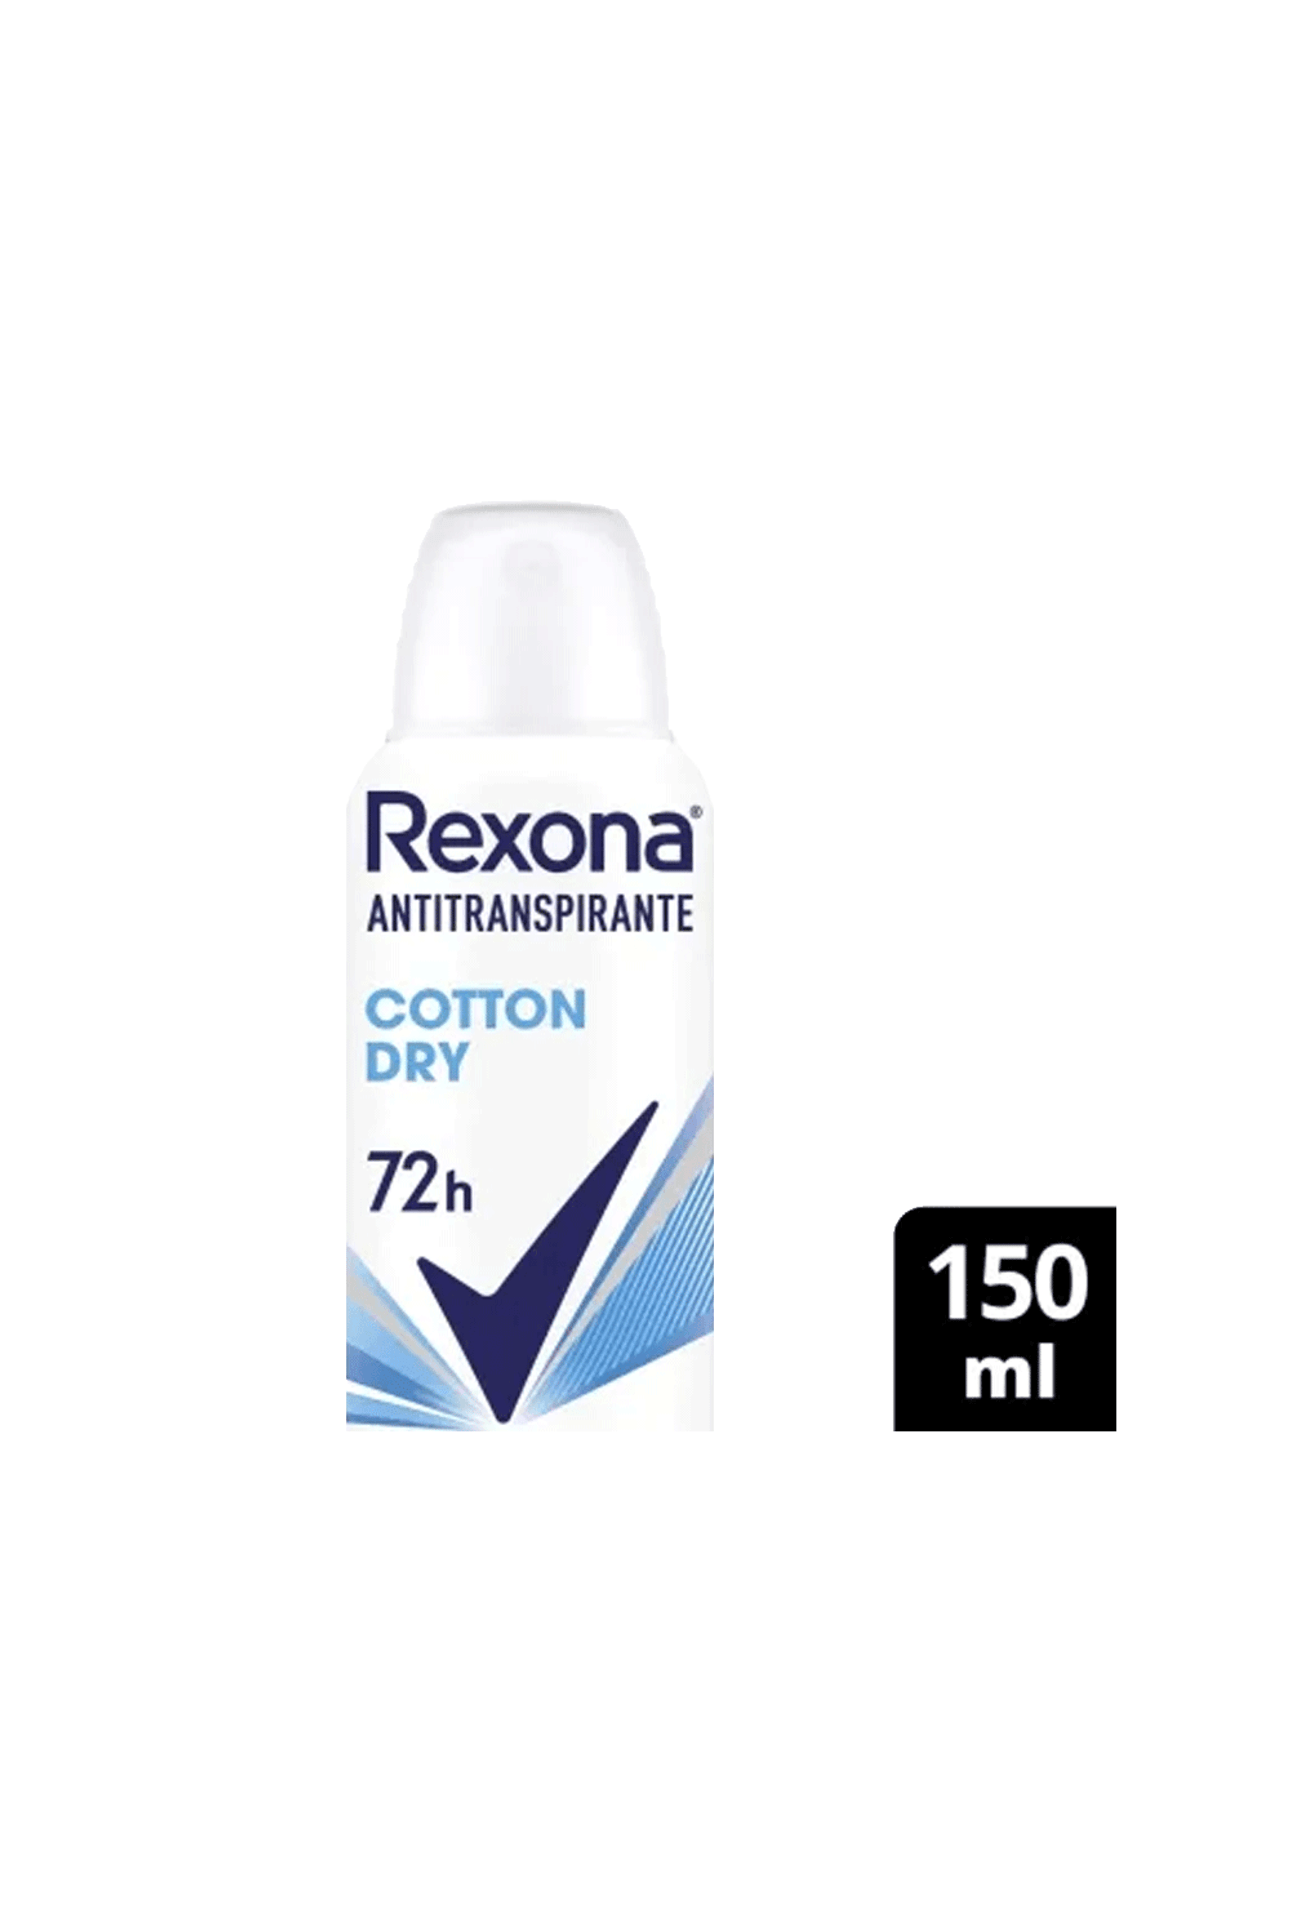 Antitranspirante Mujer Rexona Roll On Active Emotion x 50 ml -  farmaciasdelpueblo